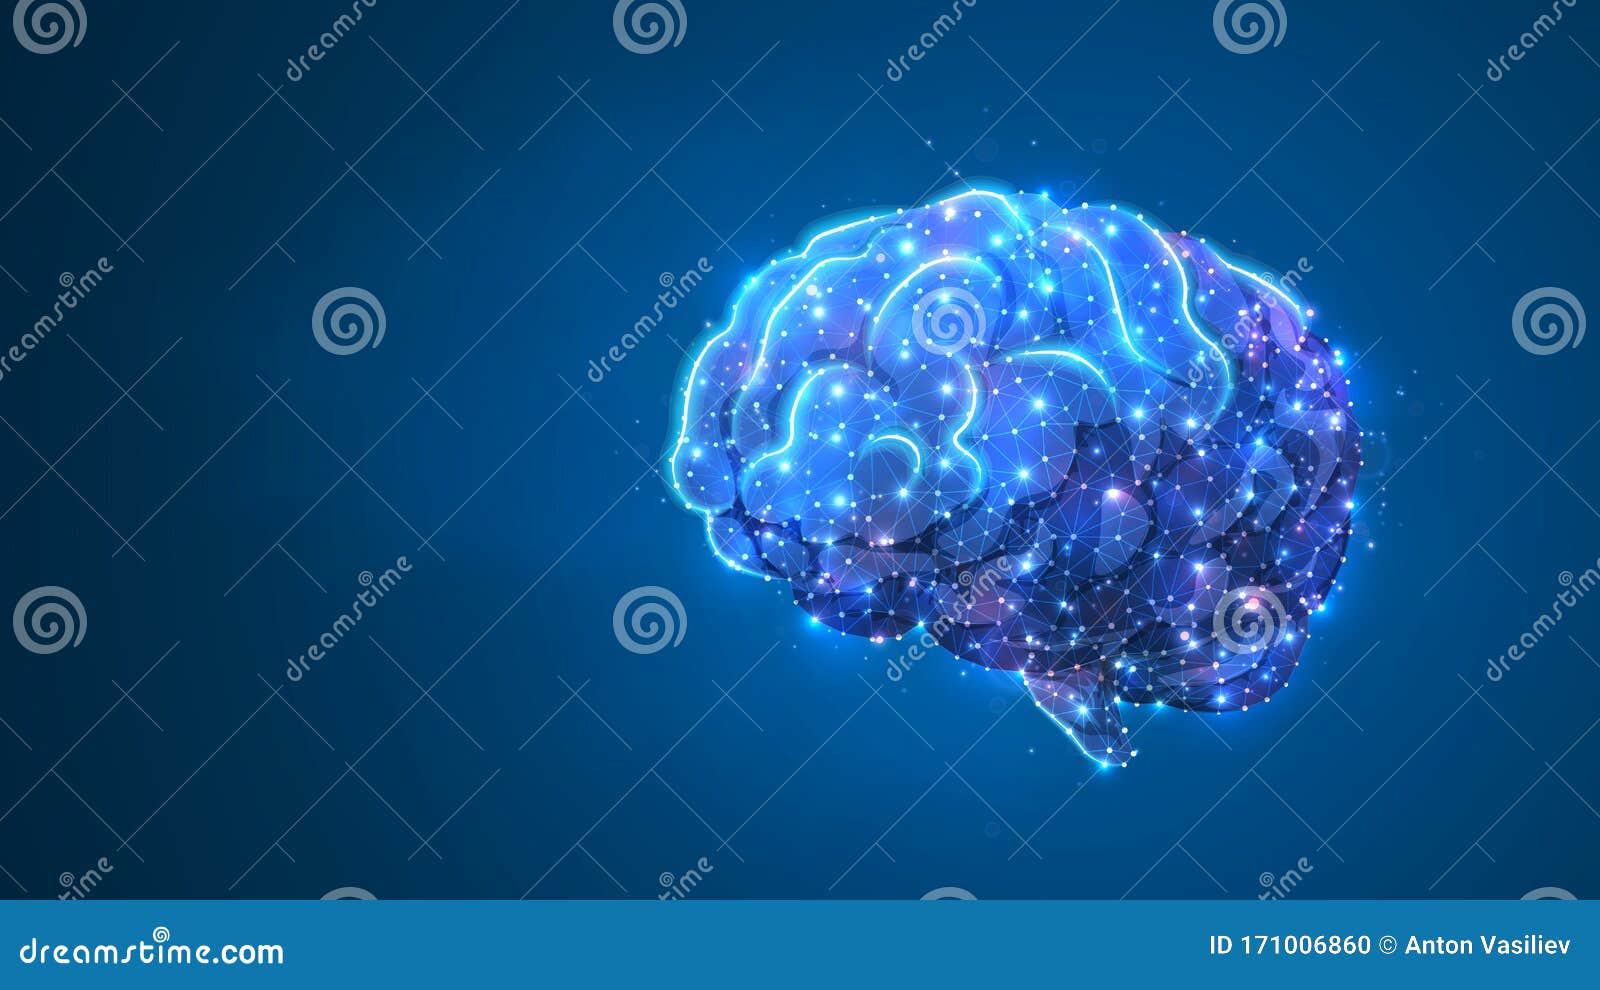 human brine. organ anatomy, neurology, healthy body concept. polygonal image on blue neon background. low poly, wireframe, digital